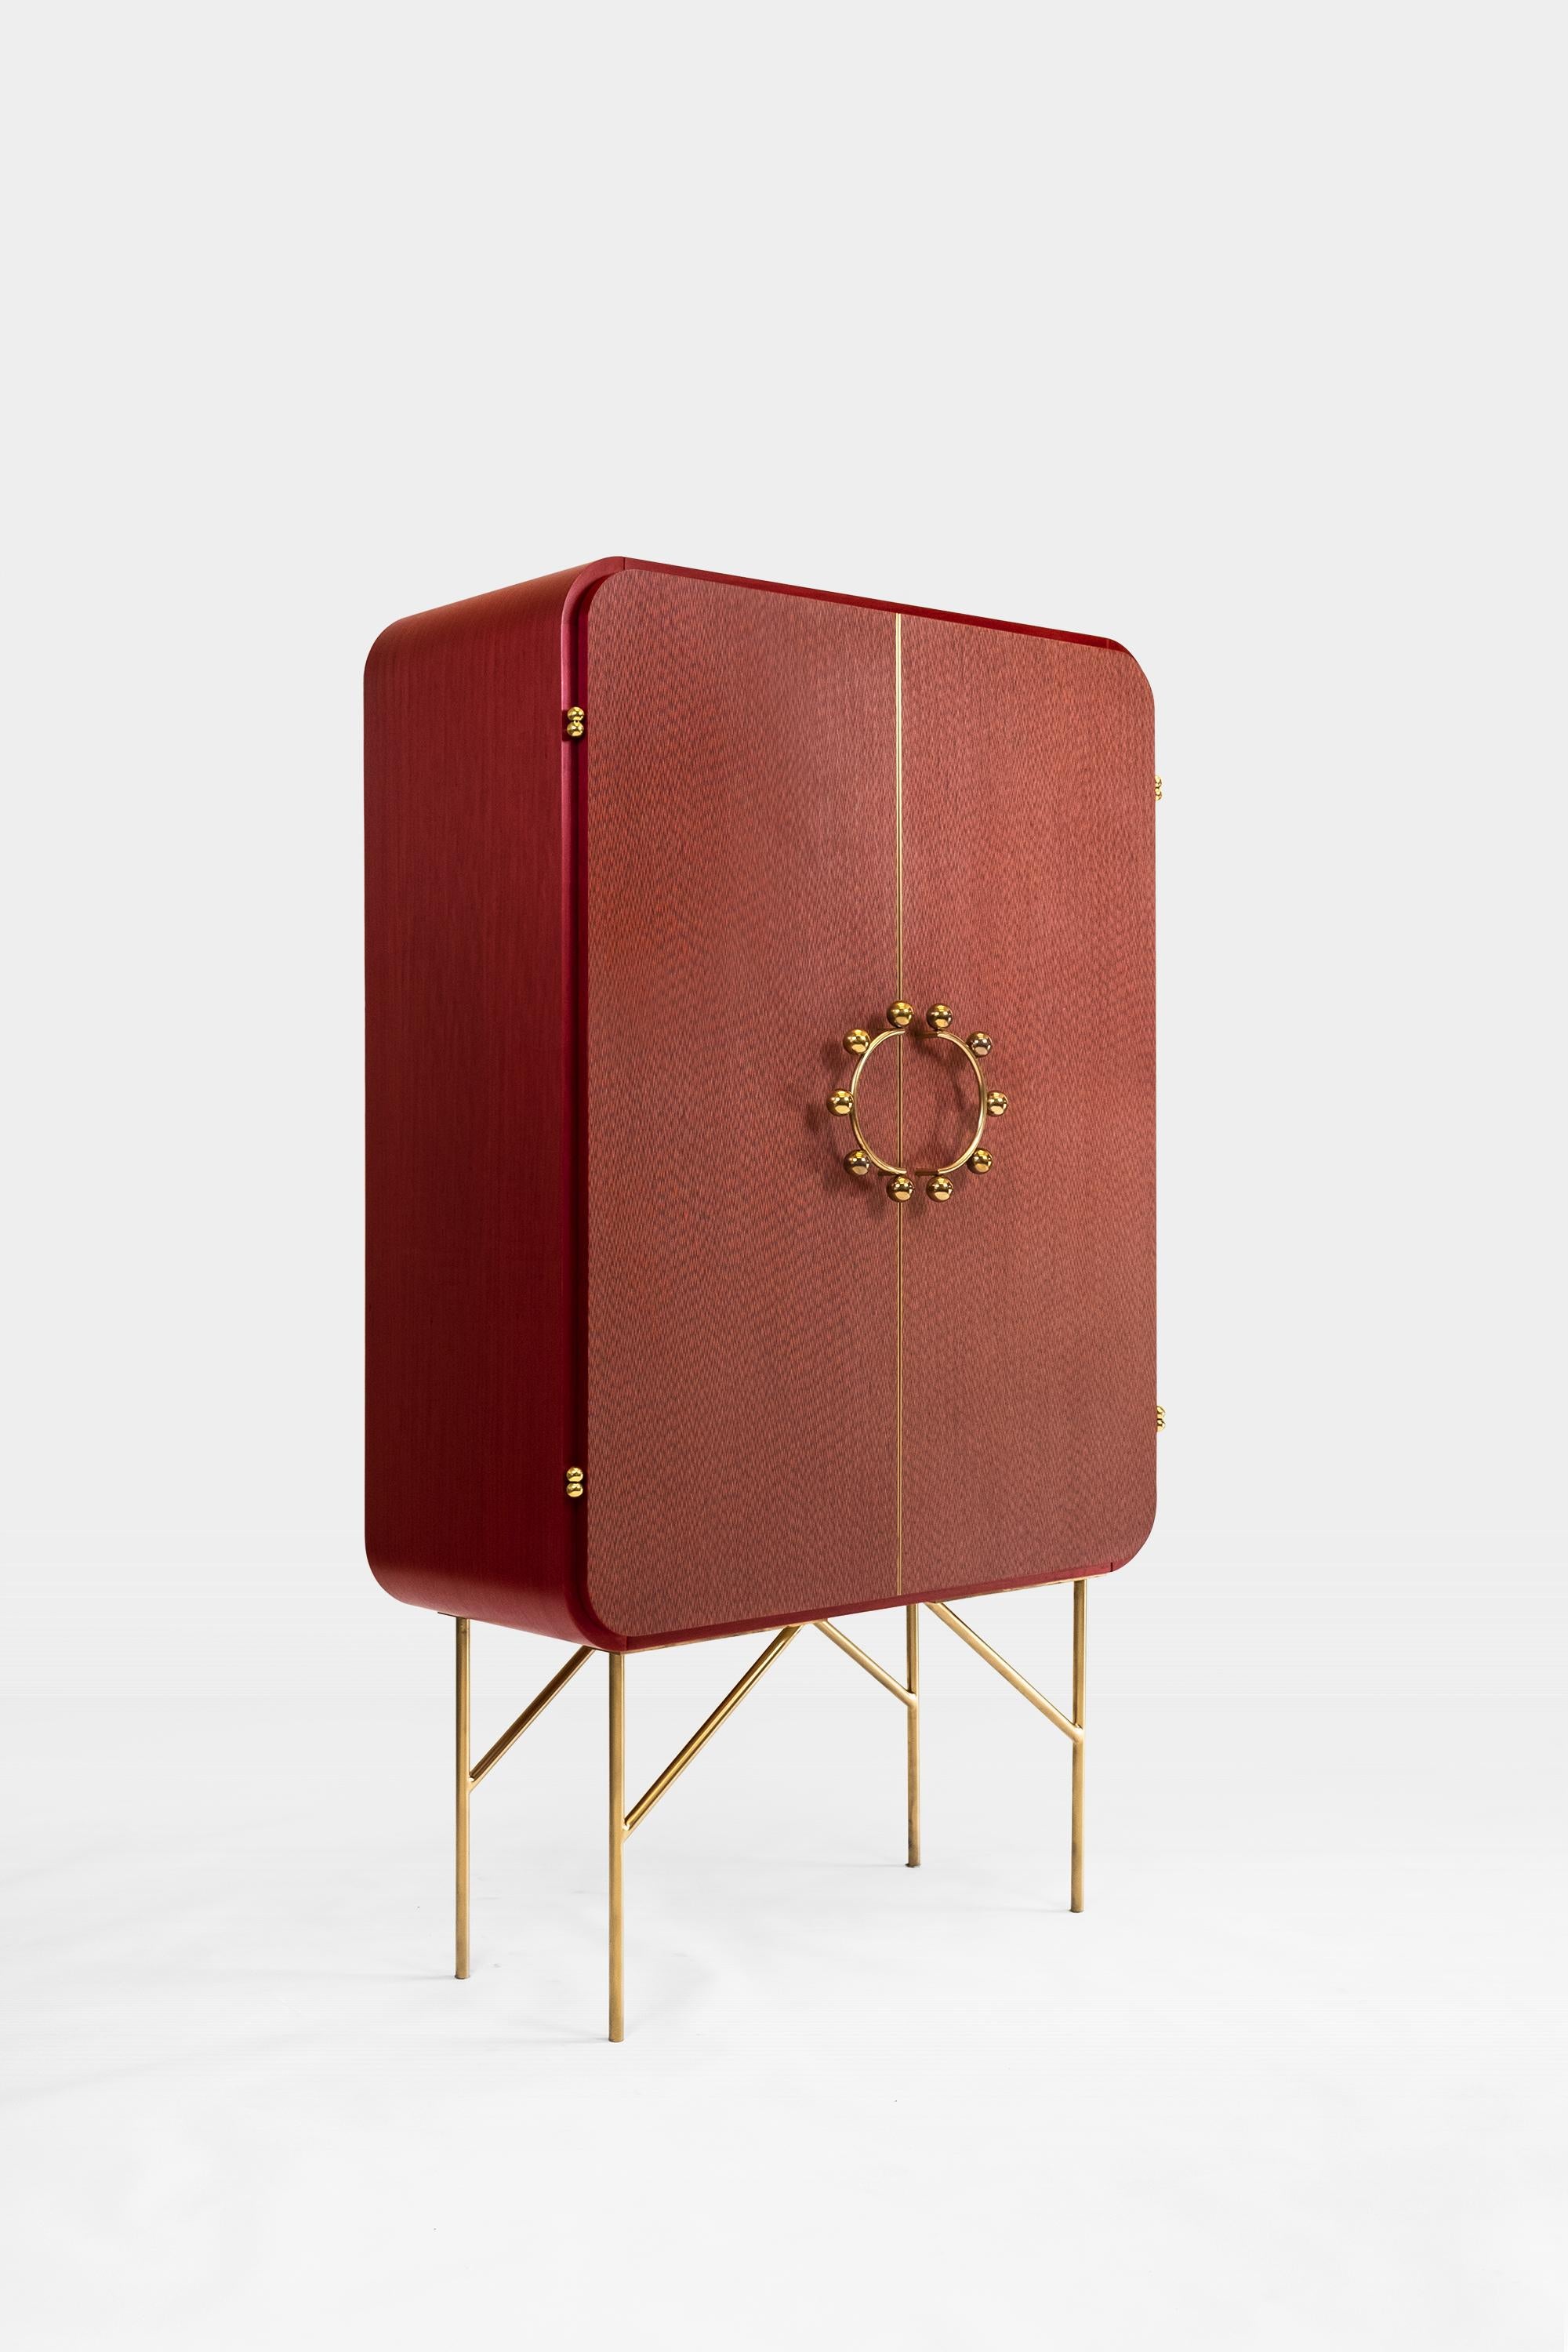 Contemporary Storage Cabinet Sideboard Cupboard Serena Confalonieri colored wood For Sale 1